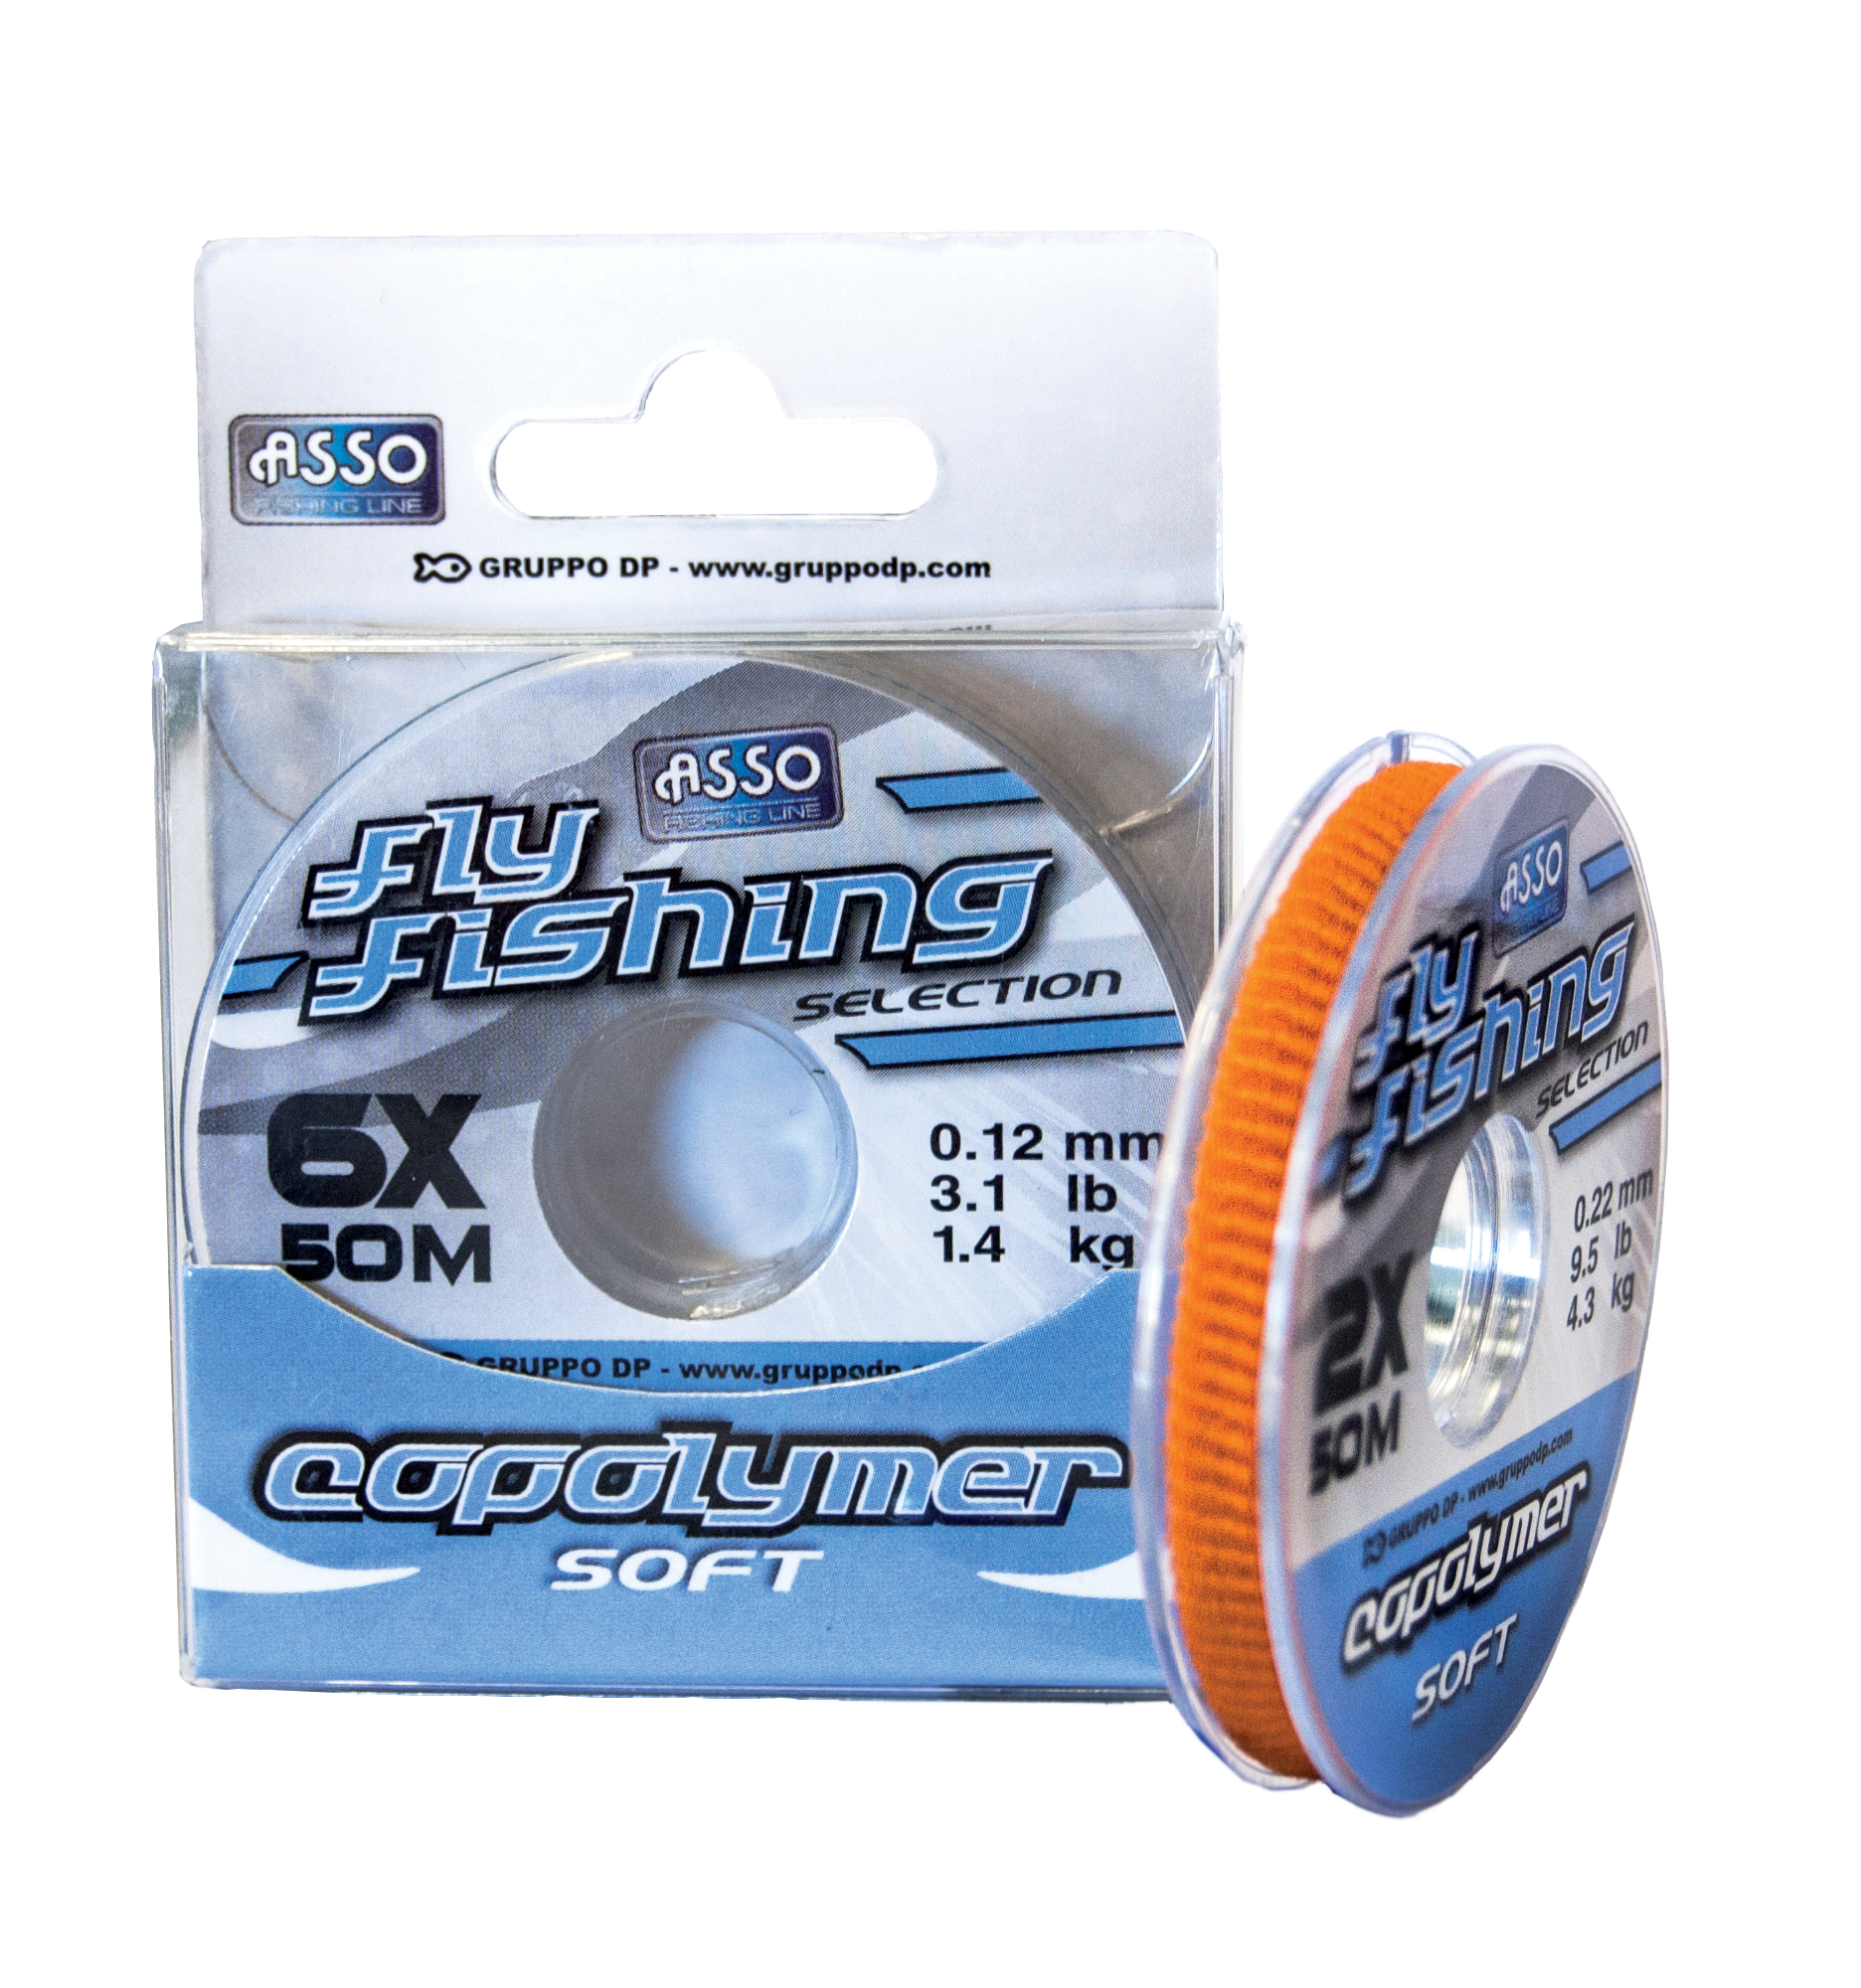 Asso Copolymer Soft - Upavon Fly Fishing